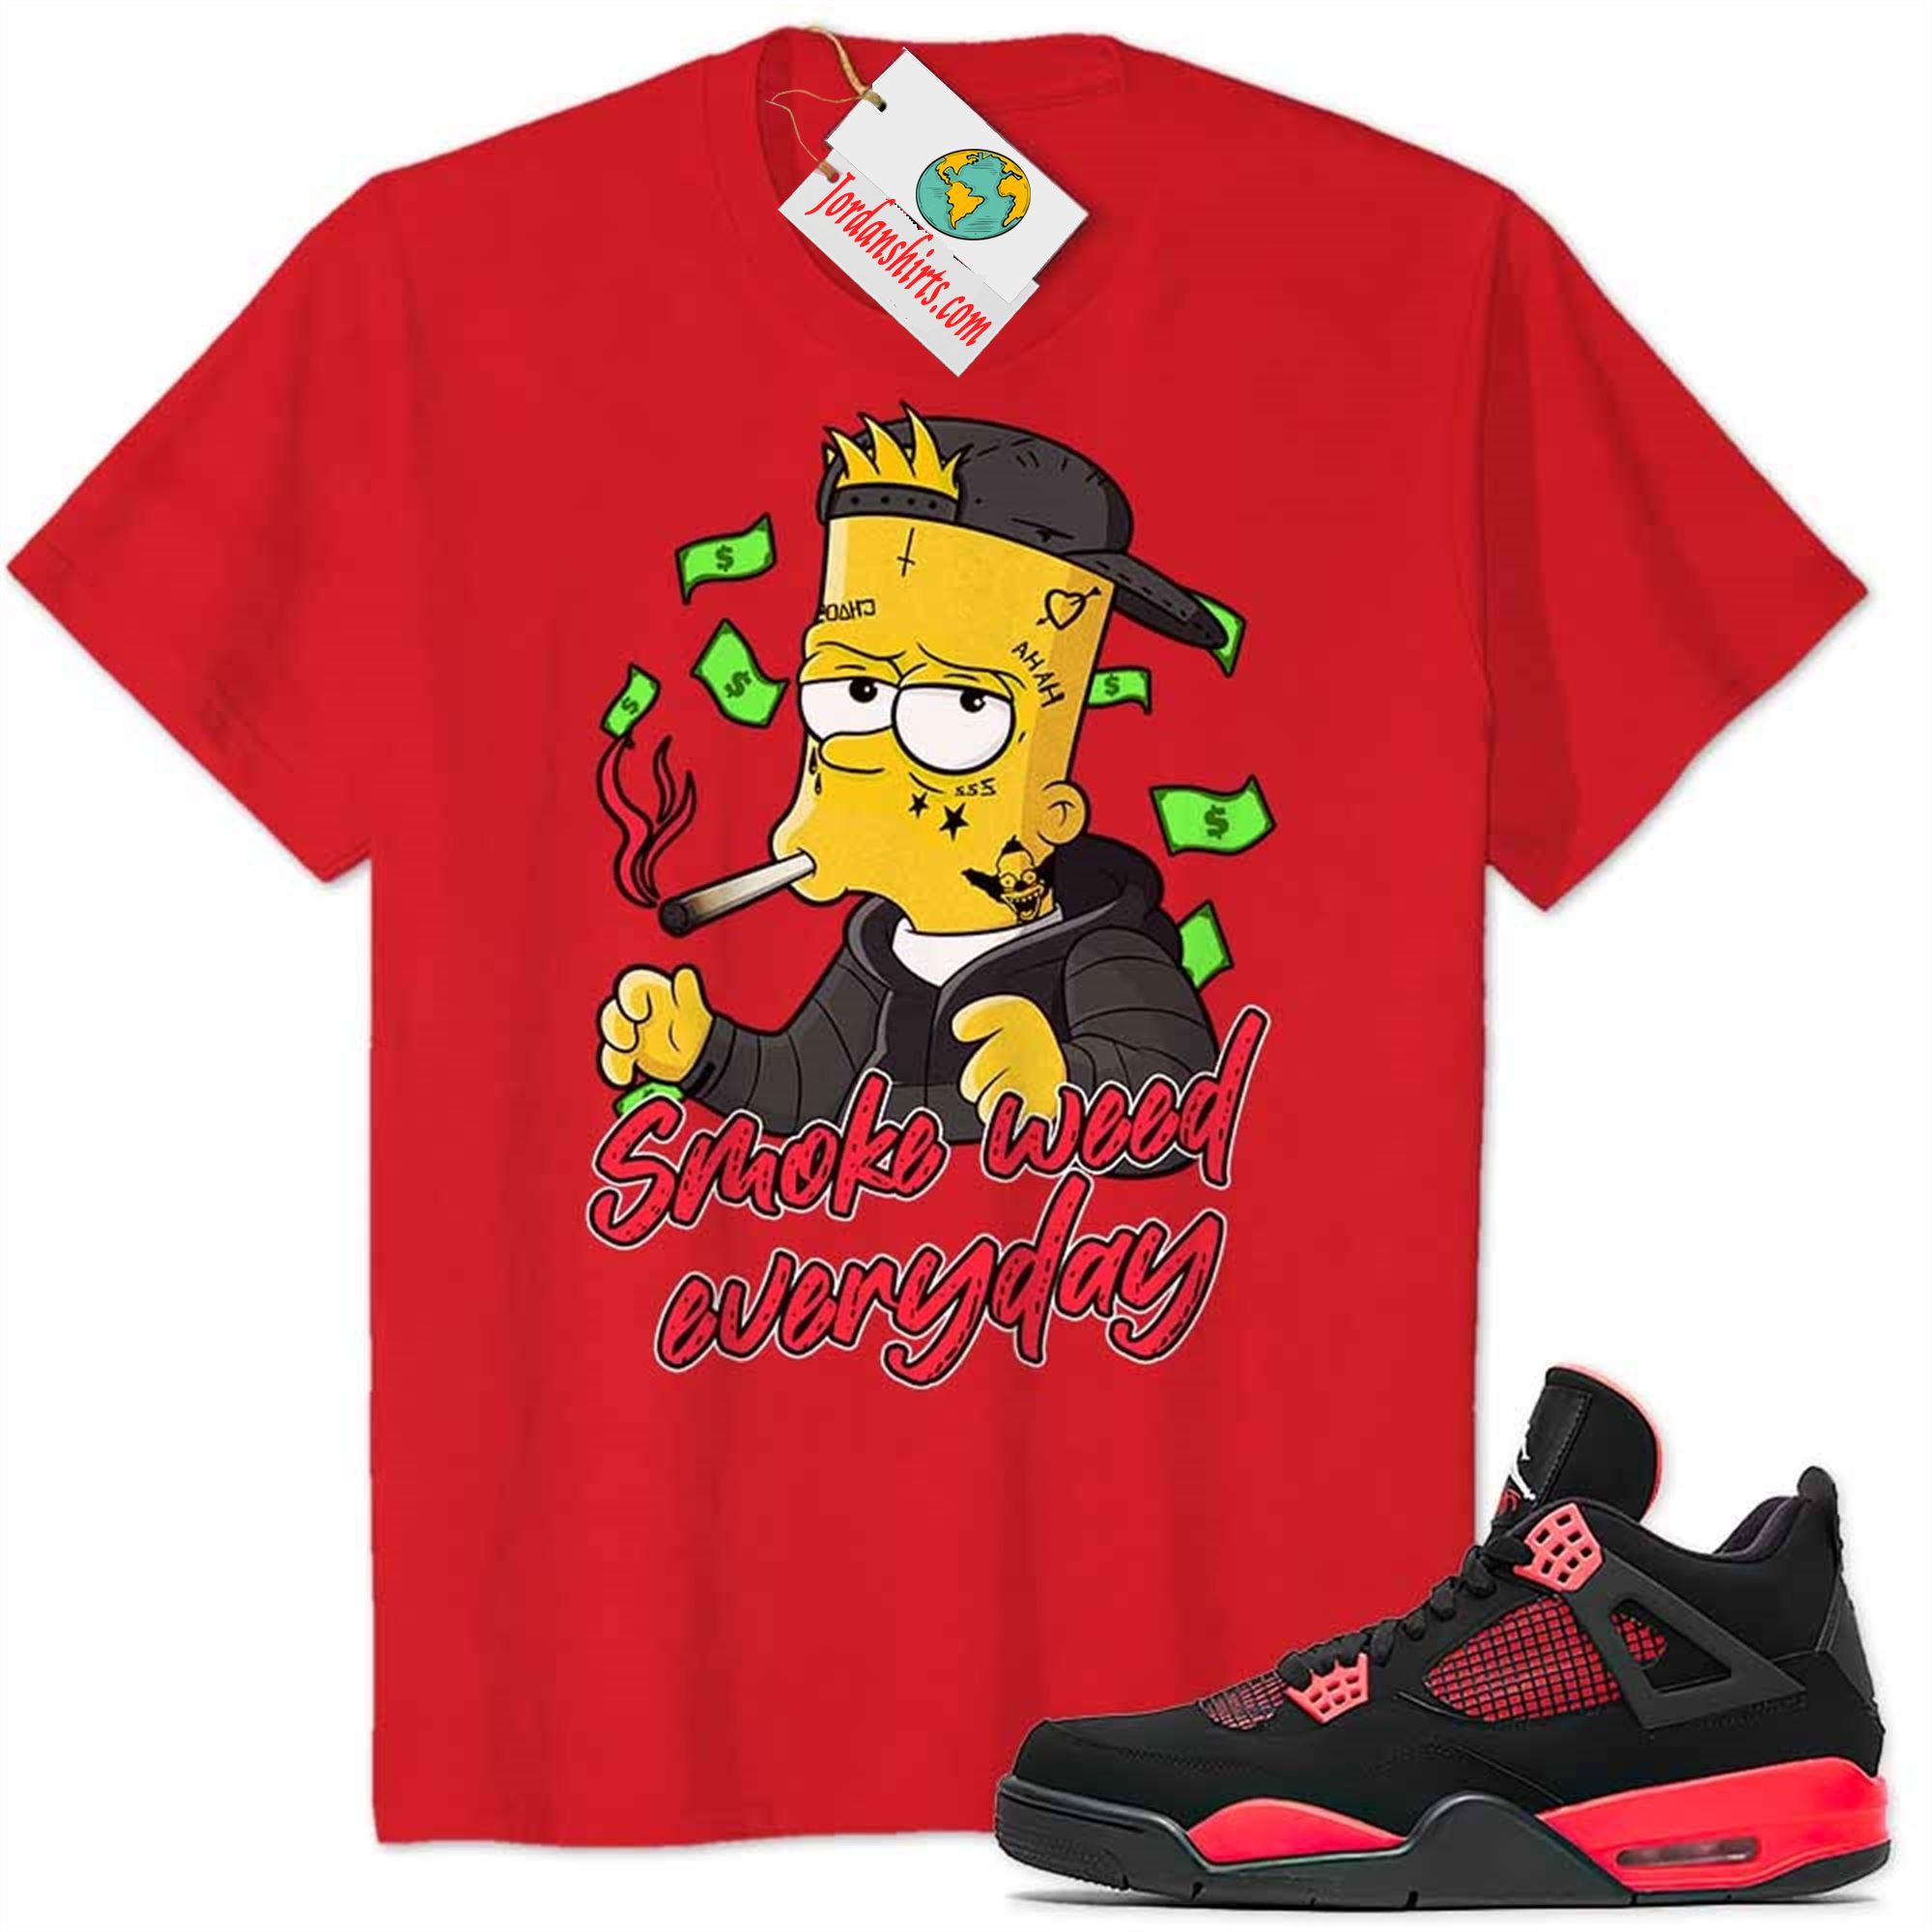 Jordan 4 Shirt, Bart Simpson Smoke Weed Everyday Red Air Jordan 4 Red Thunder 4s-trungten-chp8y Full Size Up To 5xl